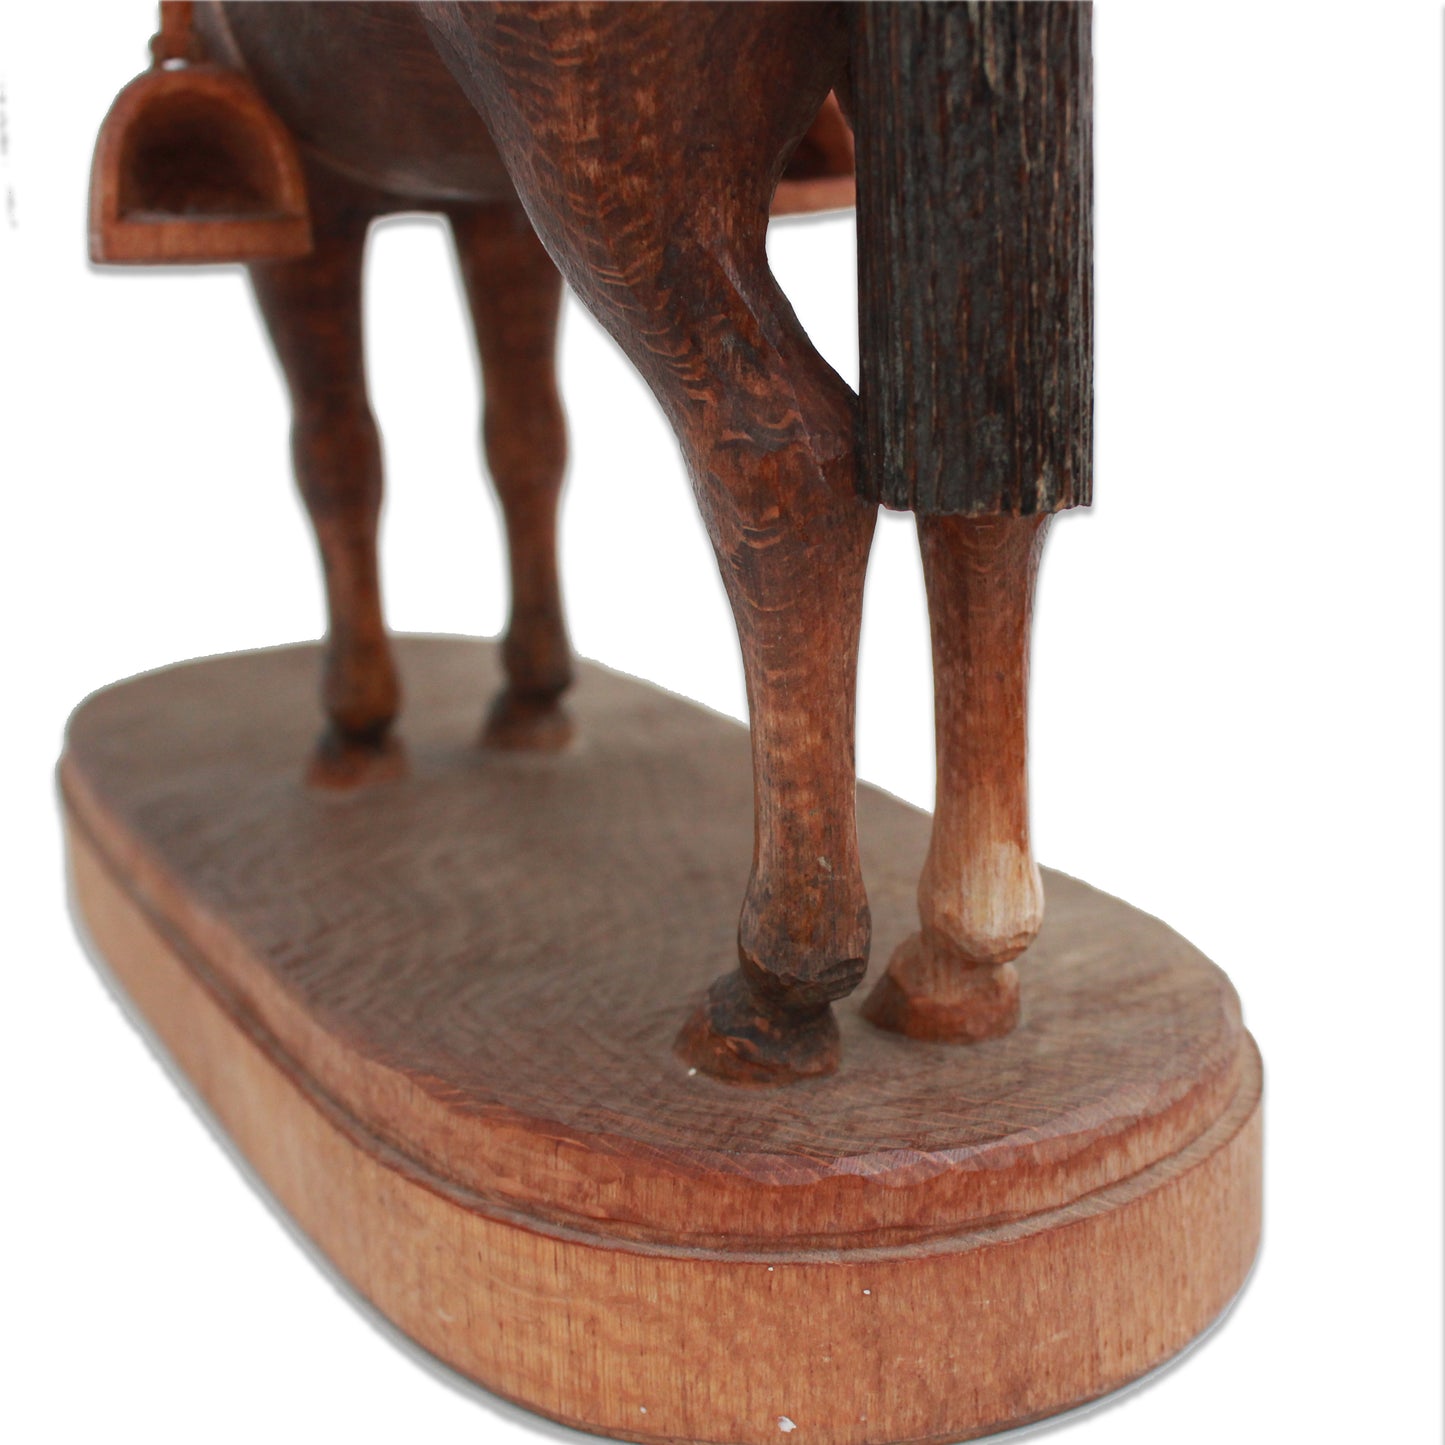 Chilean Folk Art Carved Horse